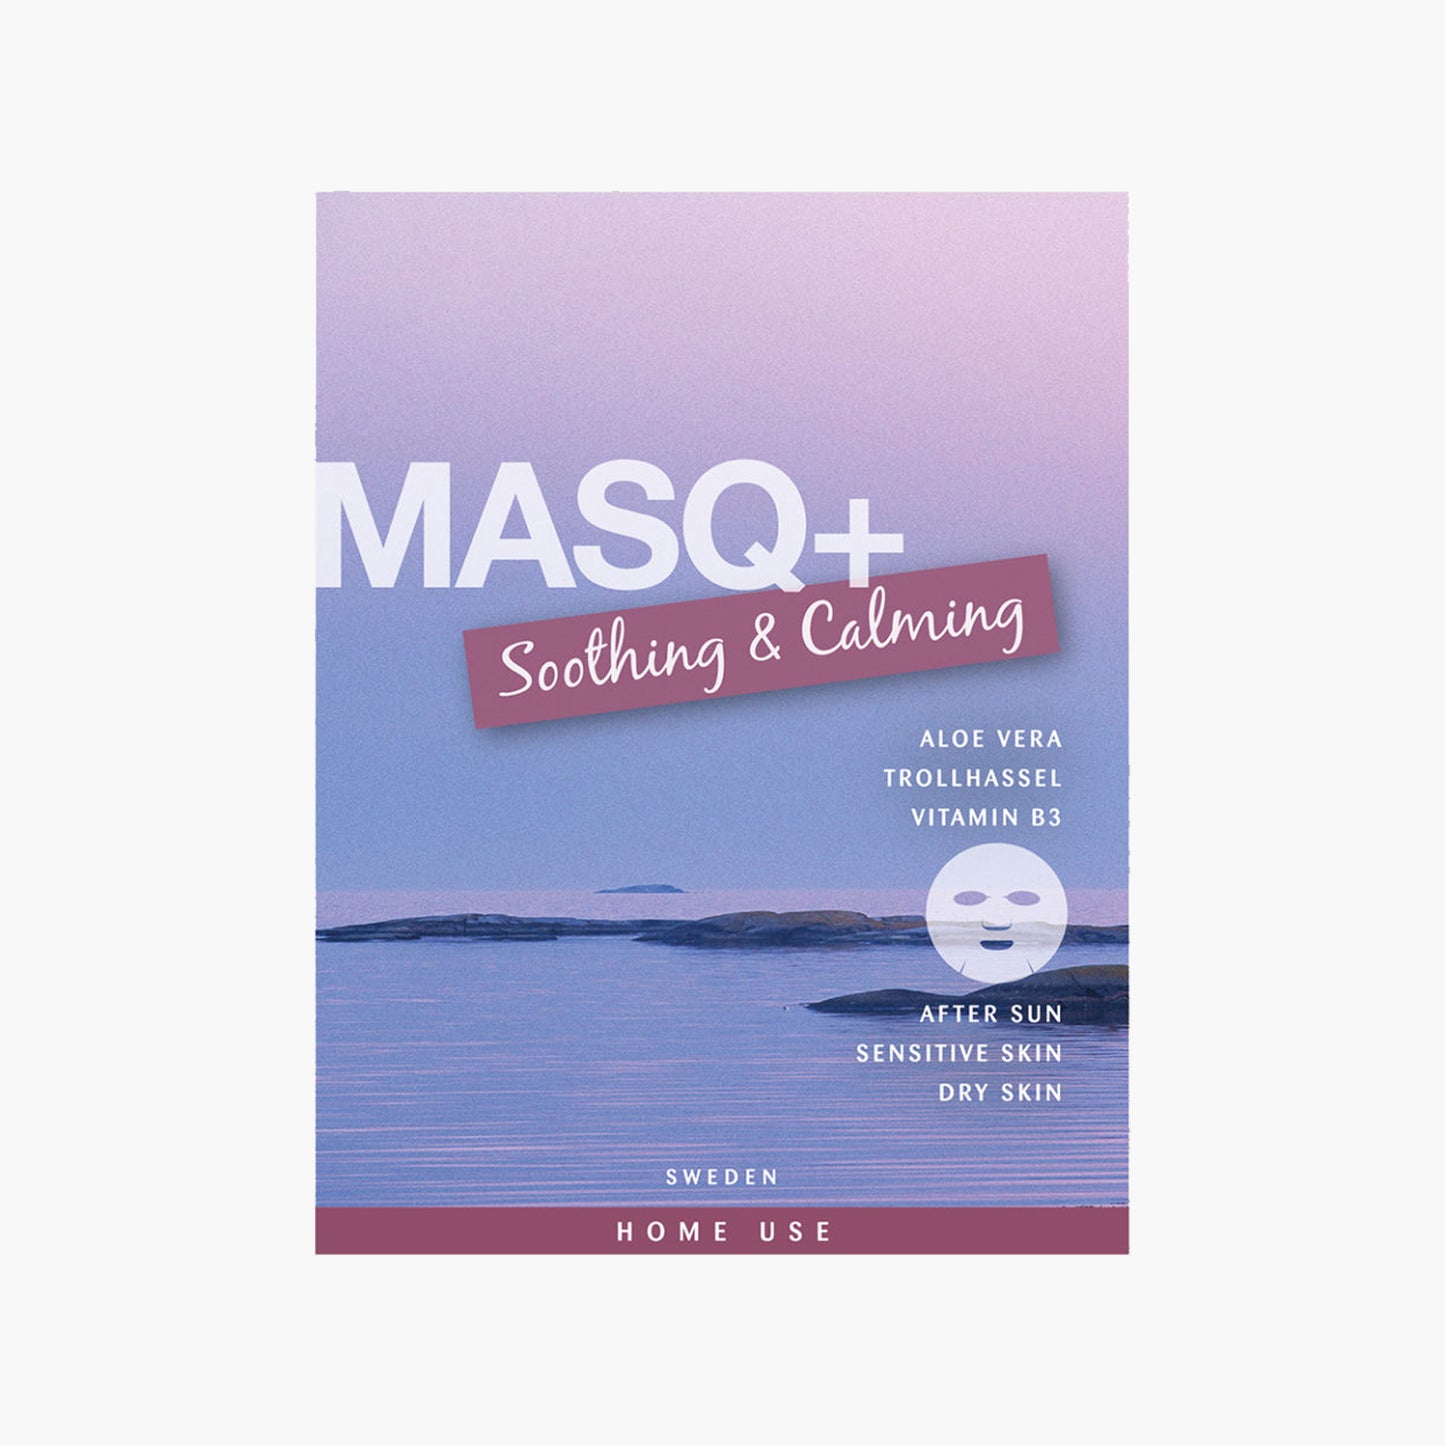 MASQ kit